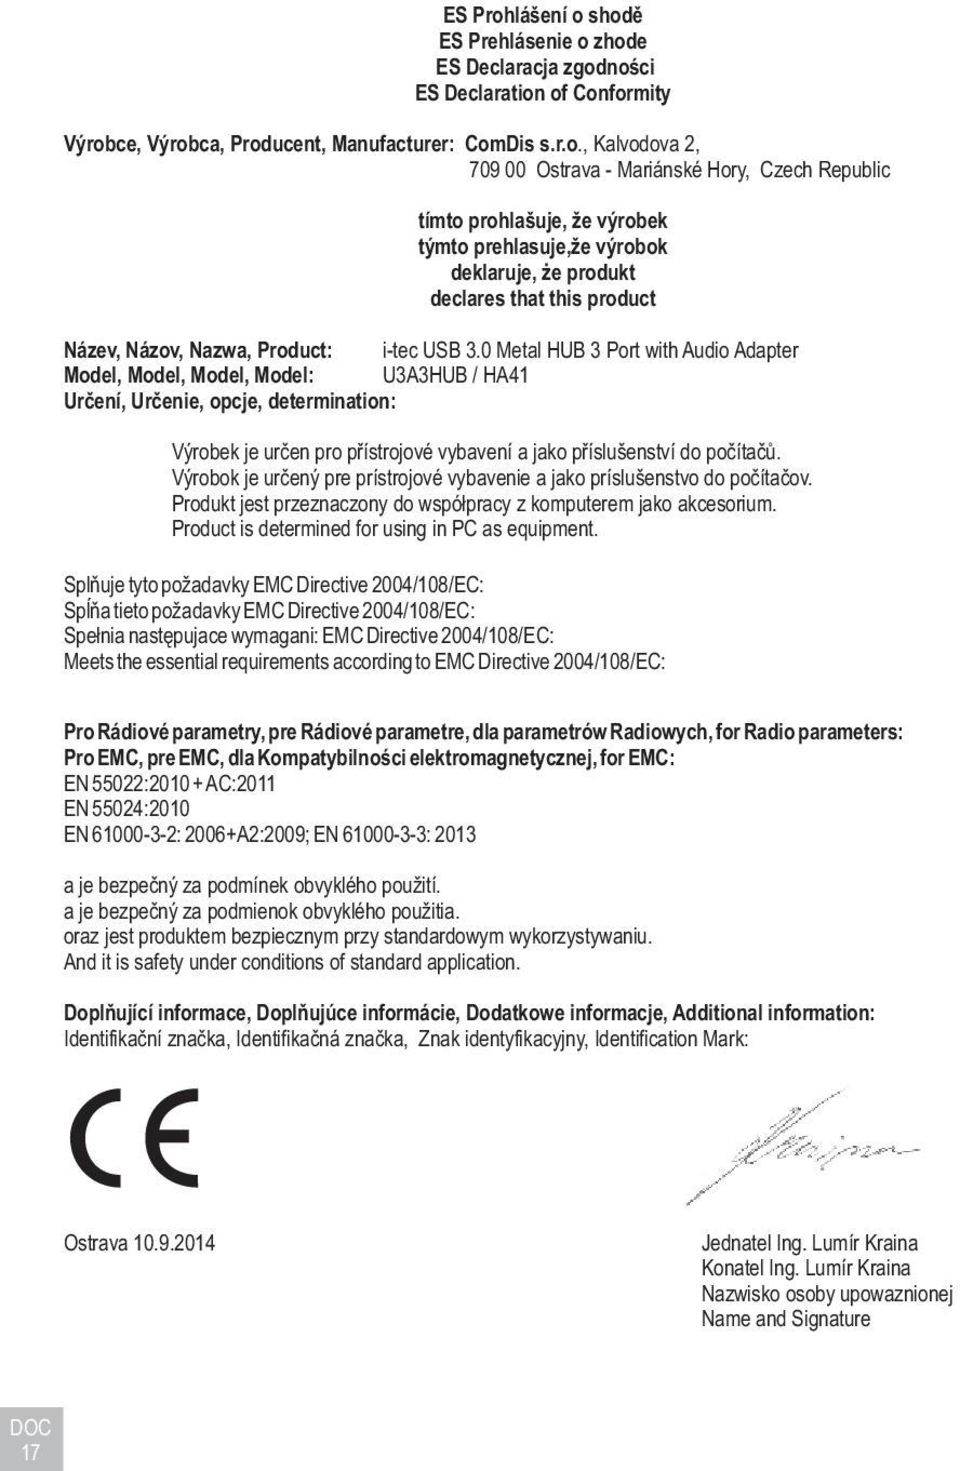 shodì ES Prehlásenie o zhode ES Declaracja zgodnoœci ES Declaration of Conformity Výrobce, Výrobca, Producent, Manufacturer: ComDis s.r.o., Kalvodova 2, 709 00 Ostrava - Mariánské Hory, Czech